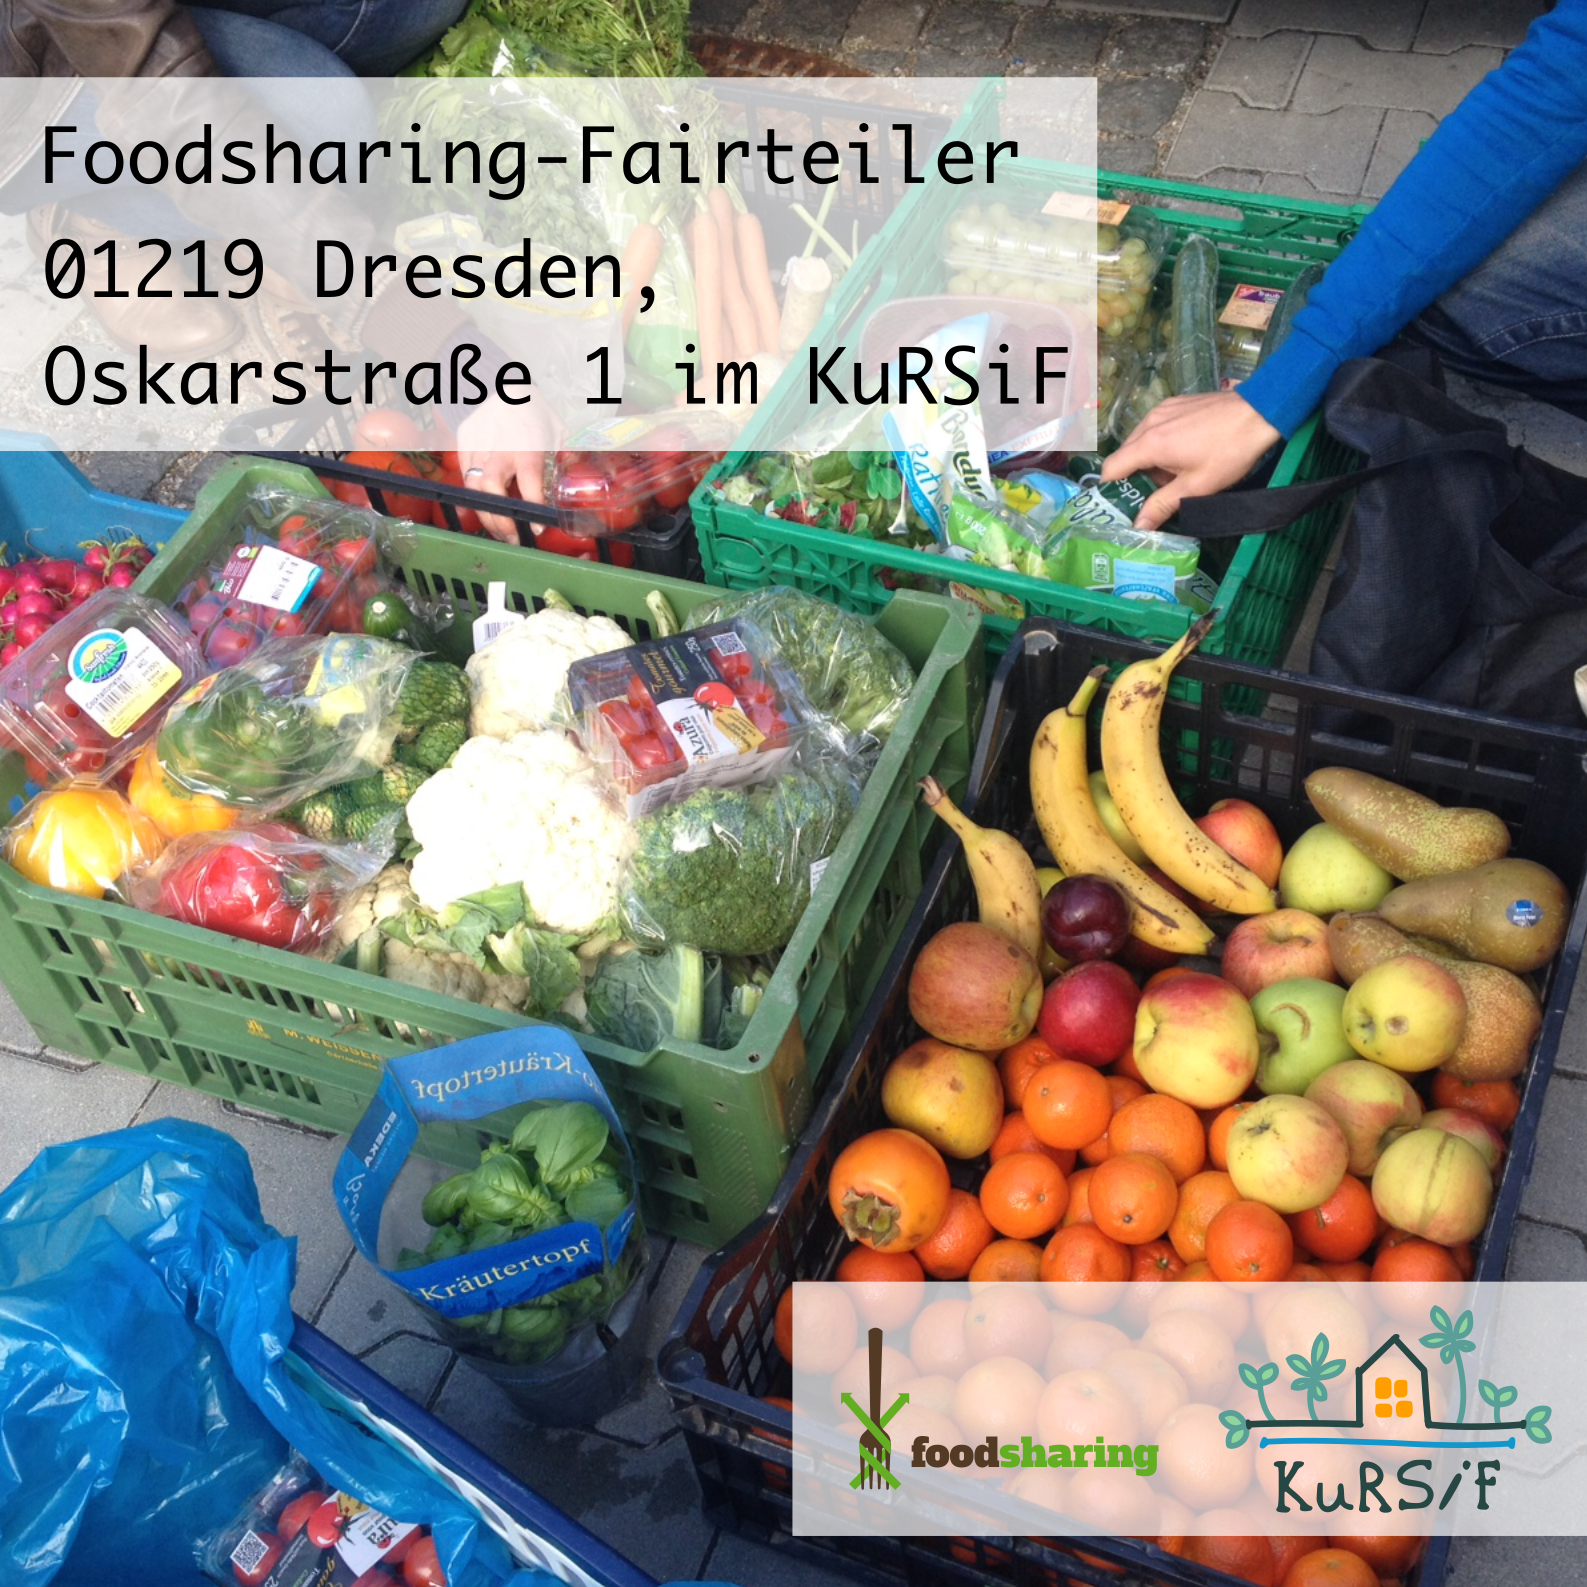 sharepic_fairteiler_foodsharing